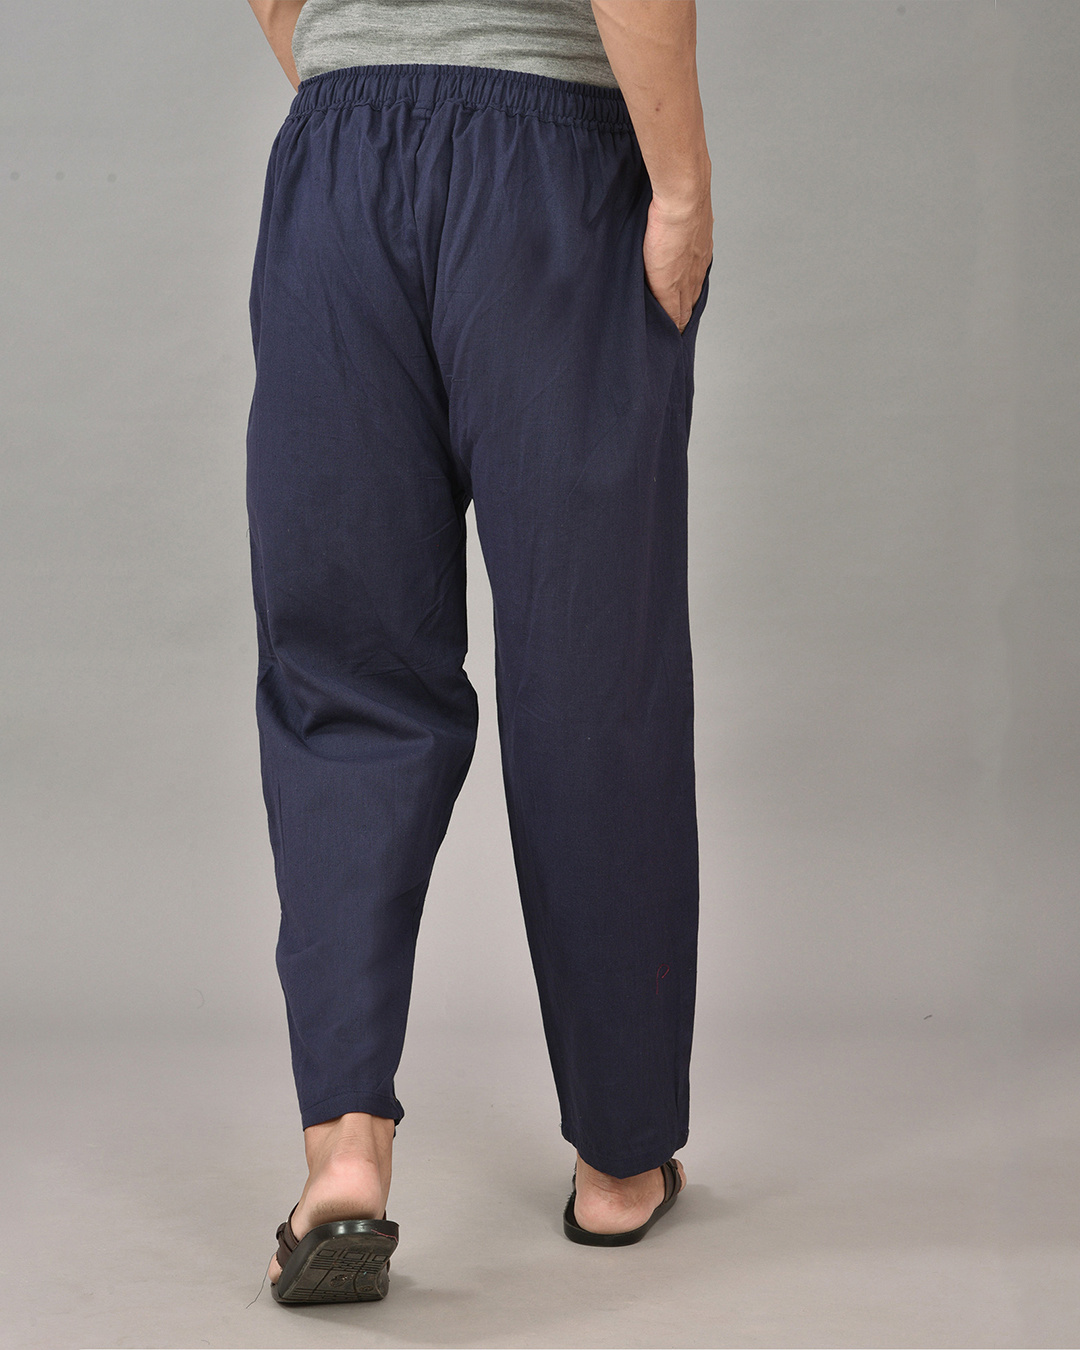 Buy Men's Blue Casual Pants Online at Bewakoof